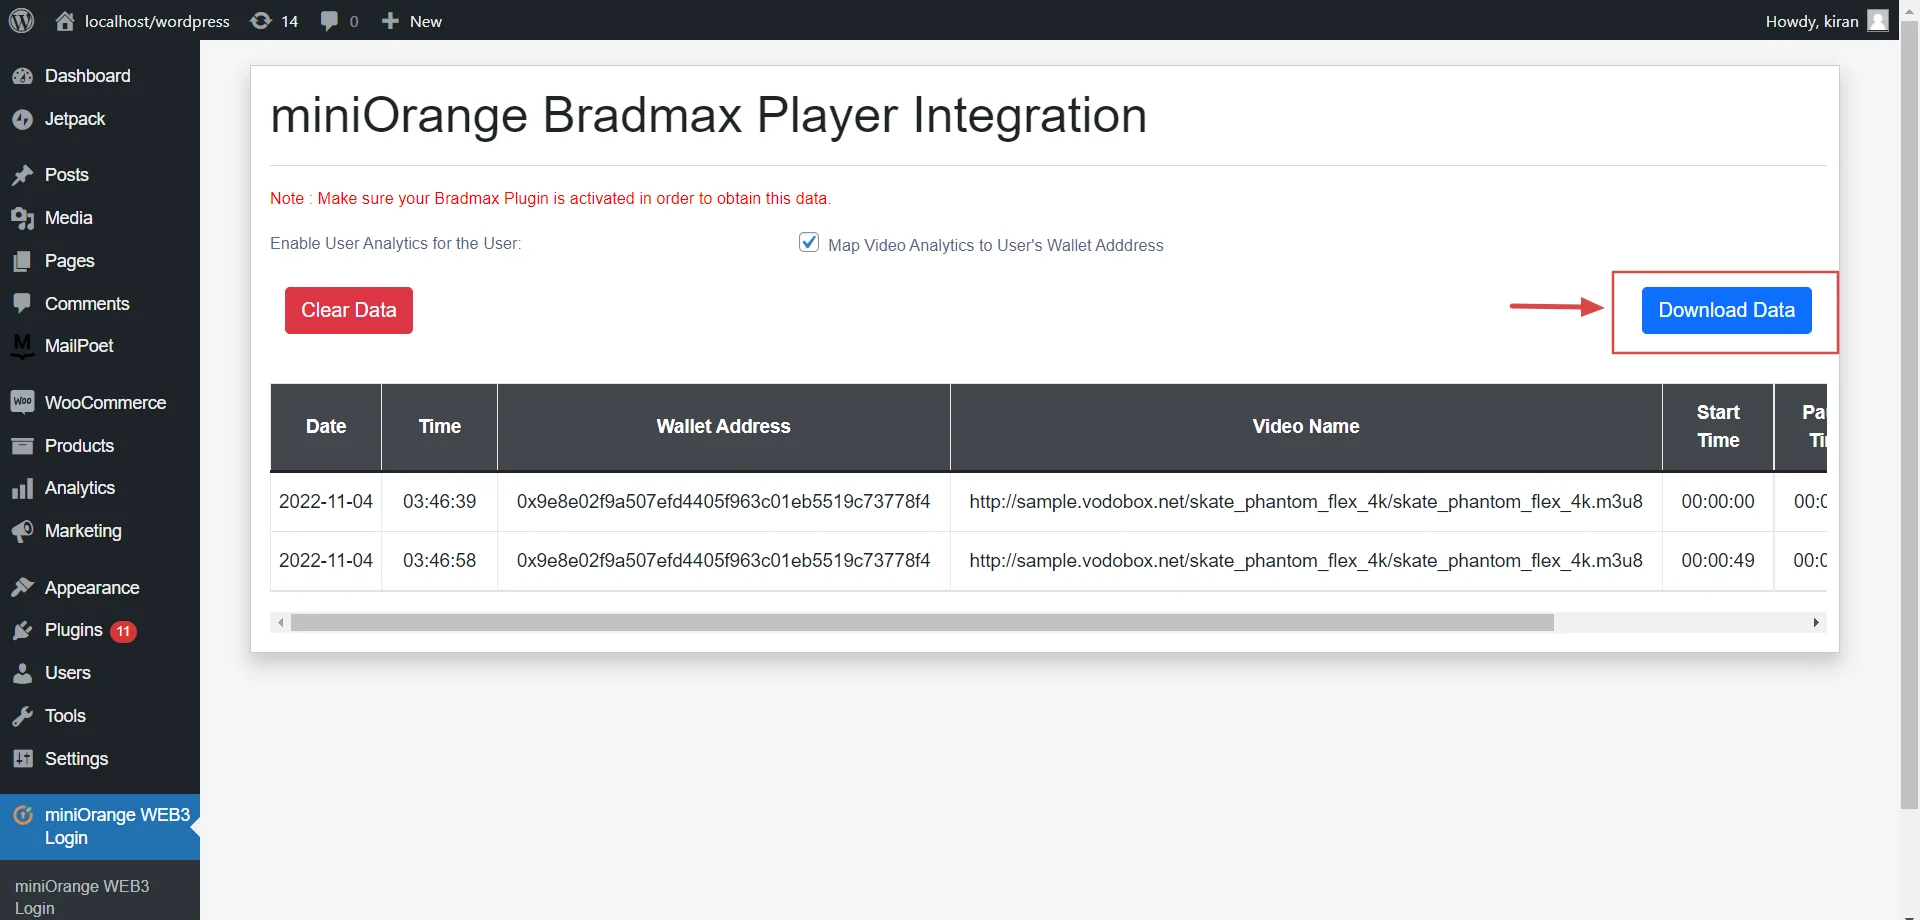 WordPresss Web3 login Bradmax Player integration addon 